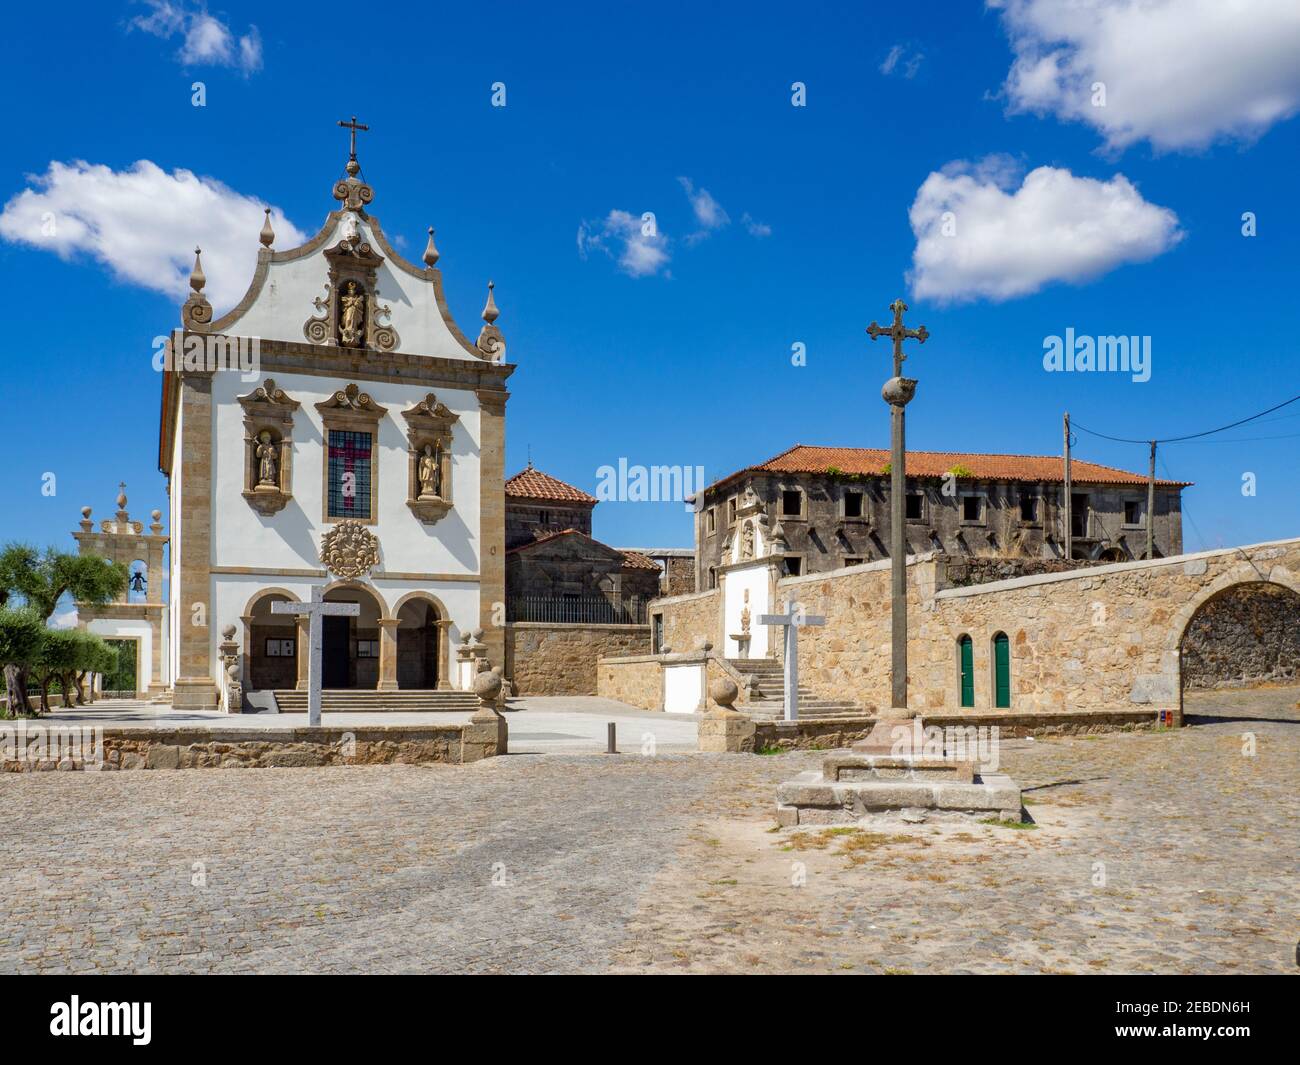 Igreja de sao jeronimo fotografías e imágenes de alta resolución - Alamy